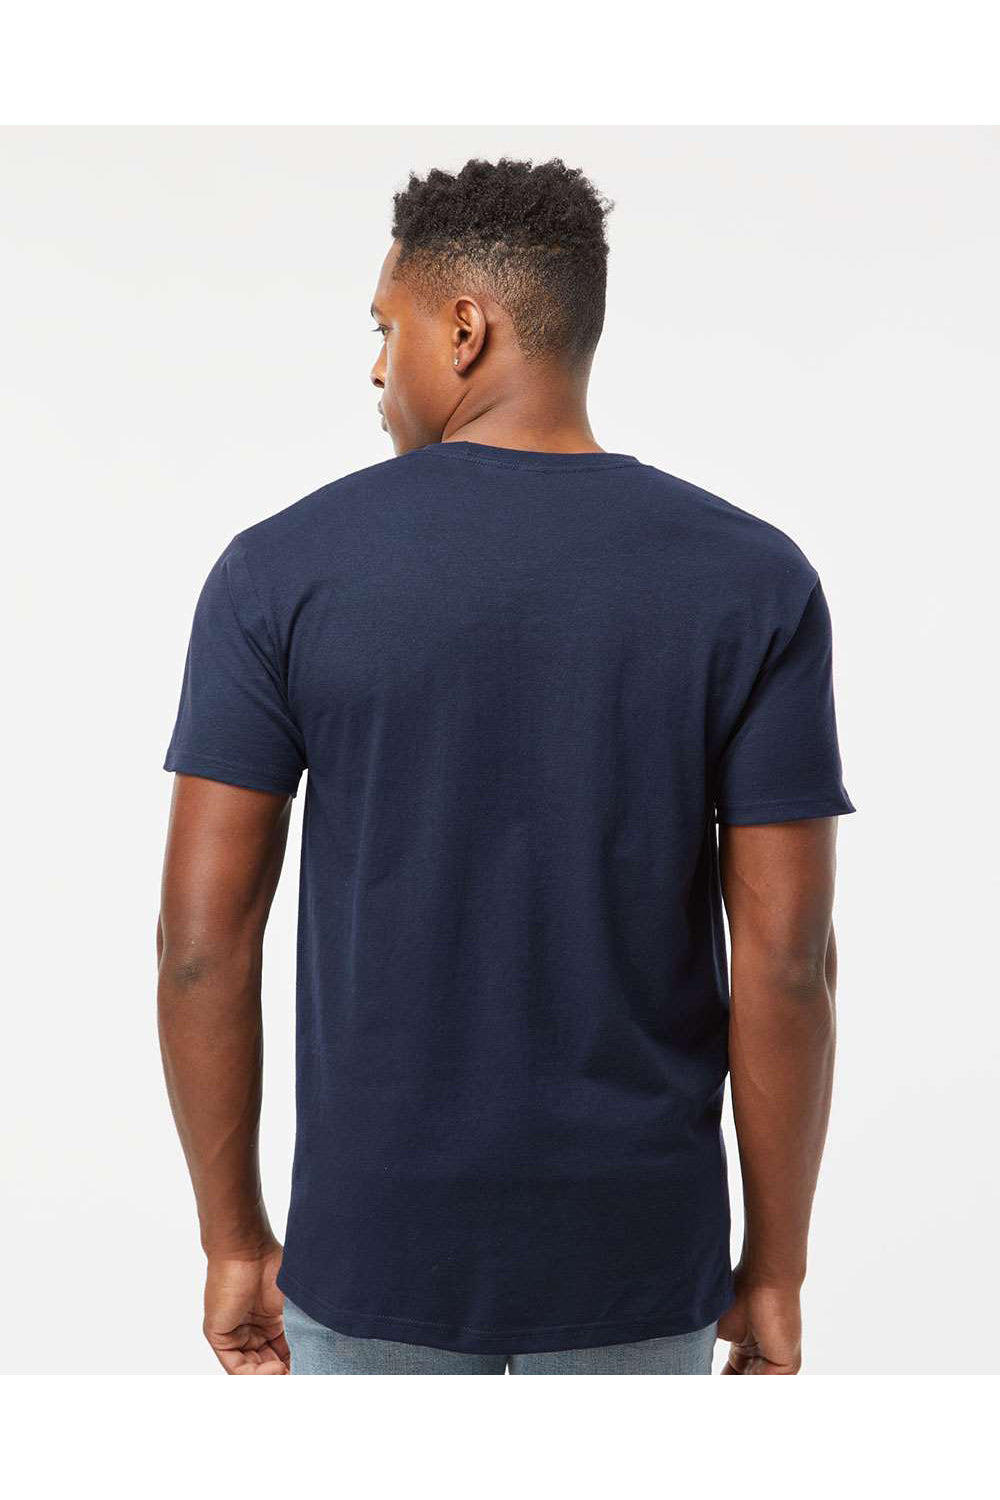 Tultex 290 Mens Jersey Short Sleeve Crewneck T-Shirt Navy Blue Model Back